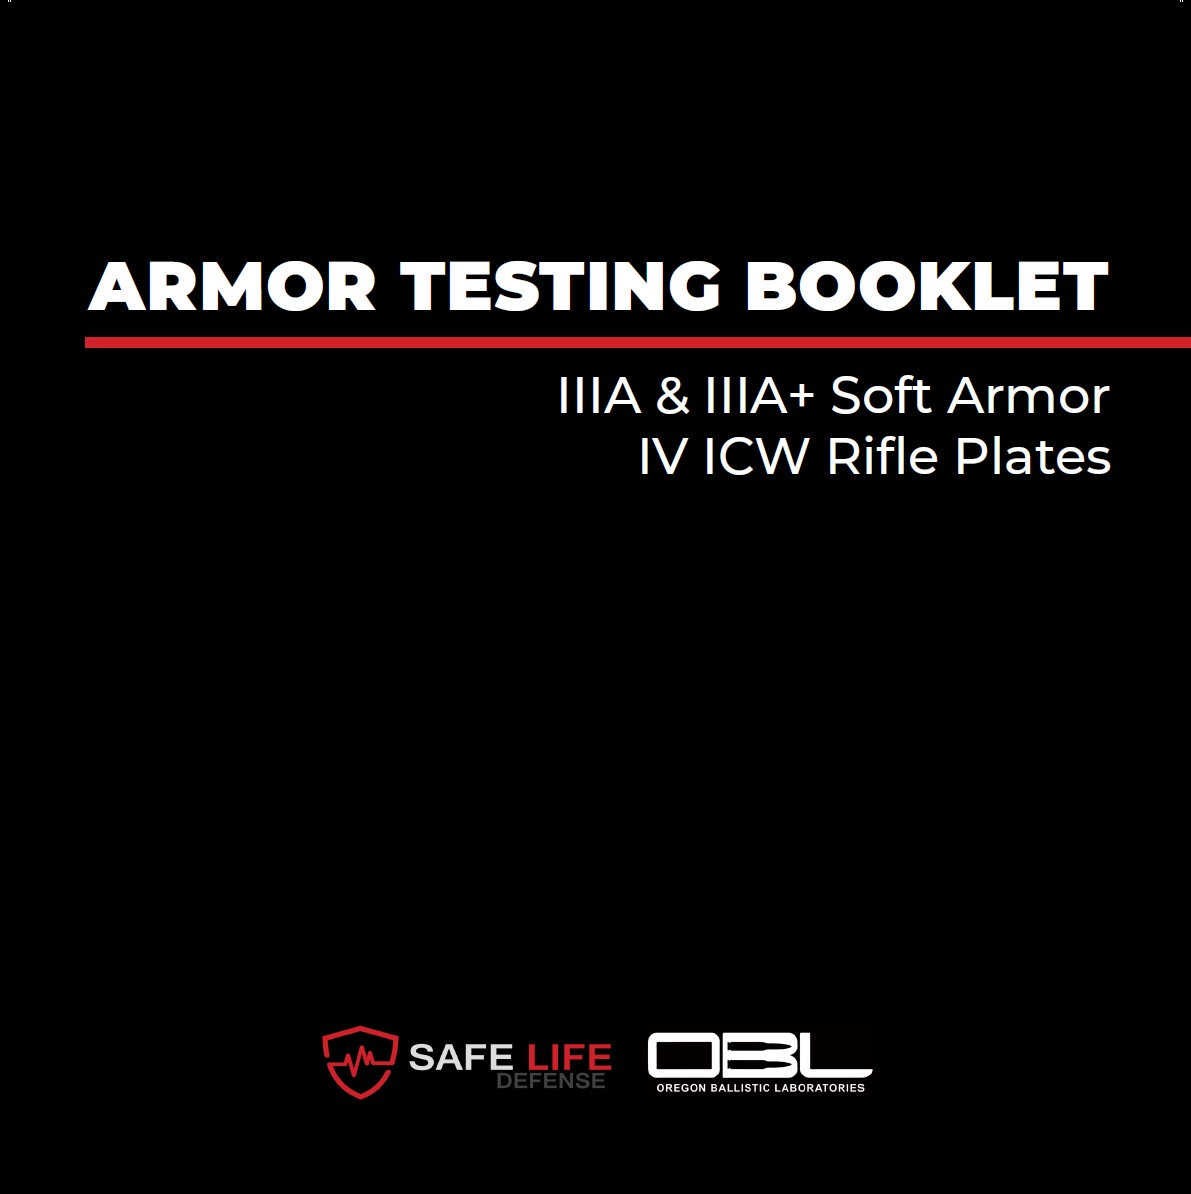 ARMOR TESTING BOOKLET - IIIA, IIA+ SOFT ARMRO AND IV ICW RIFLE PLATES